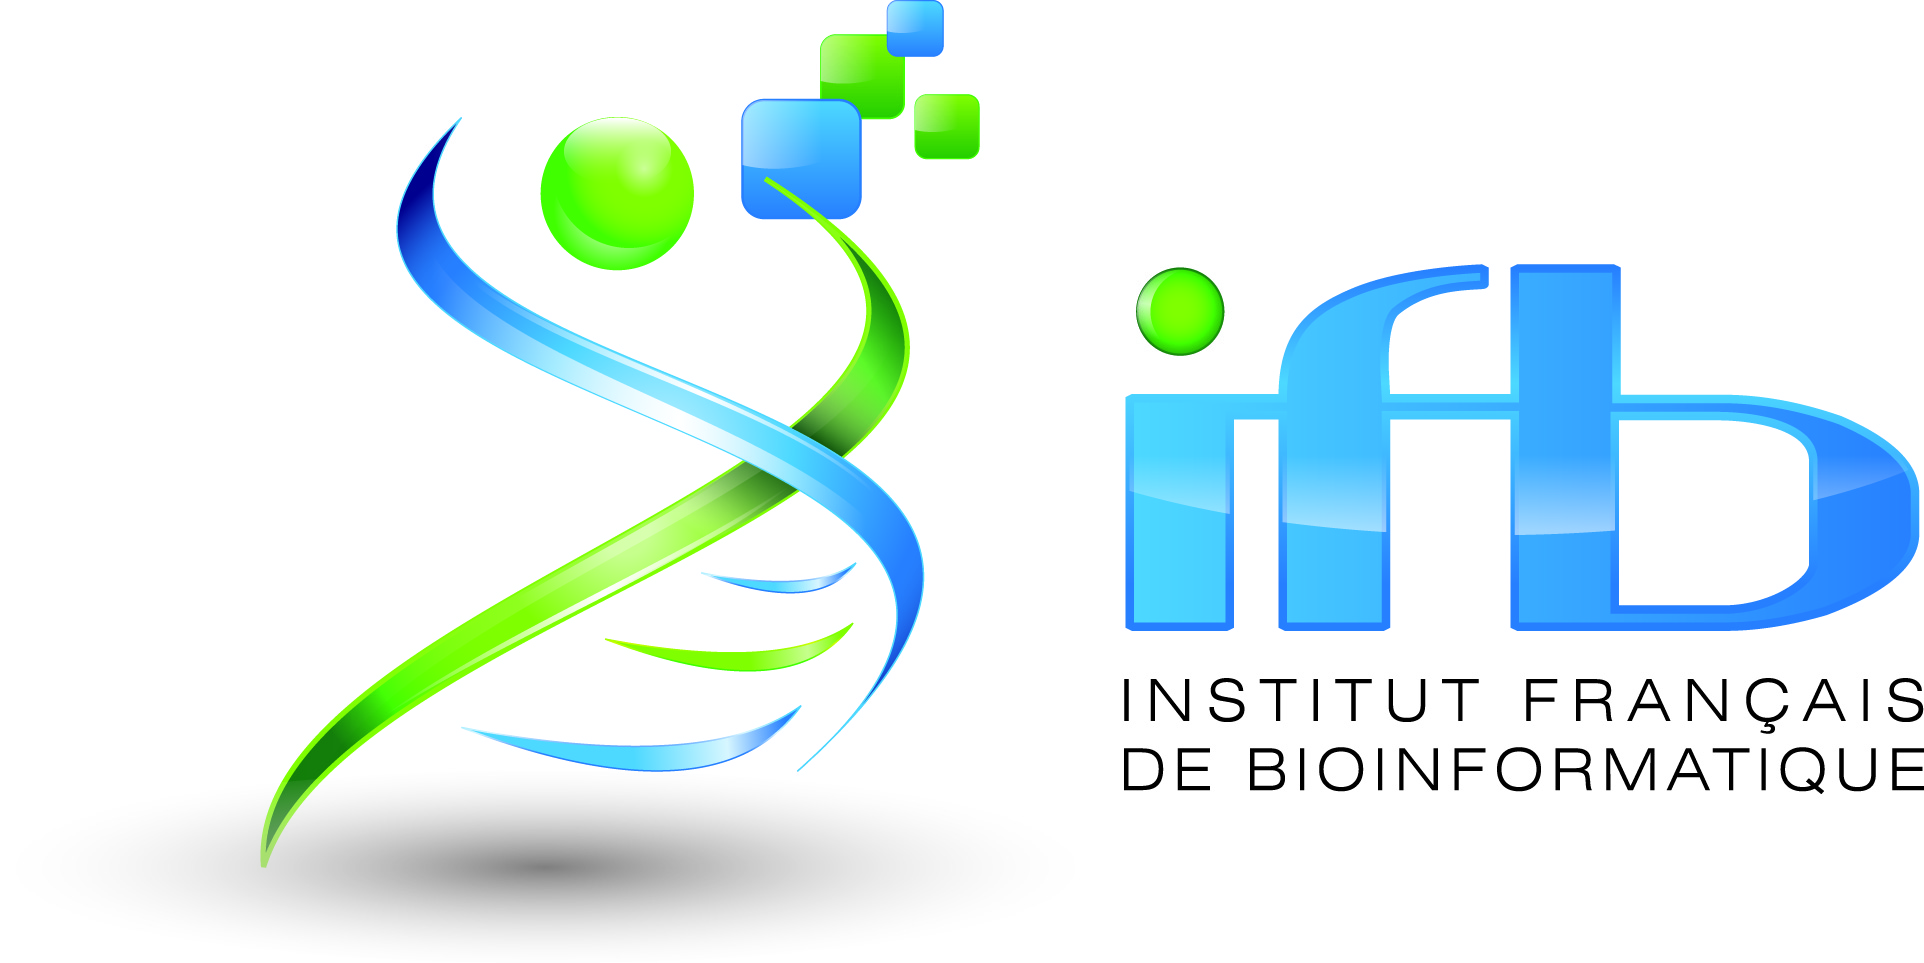 French Institute of Bioinformatics (IFB)